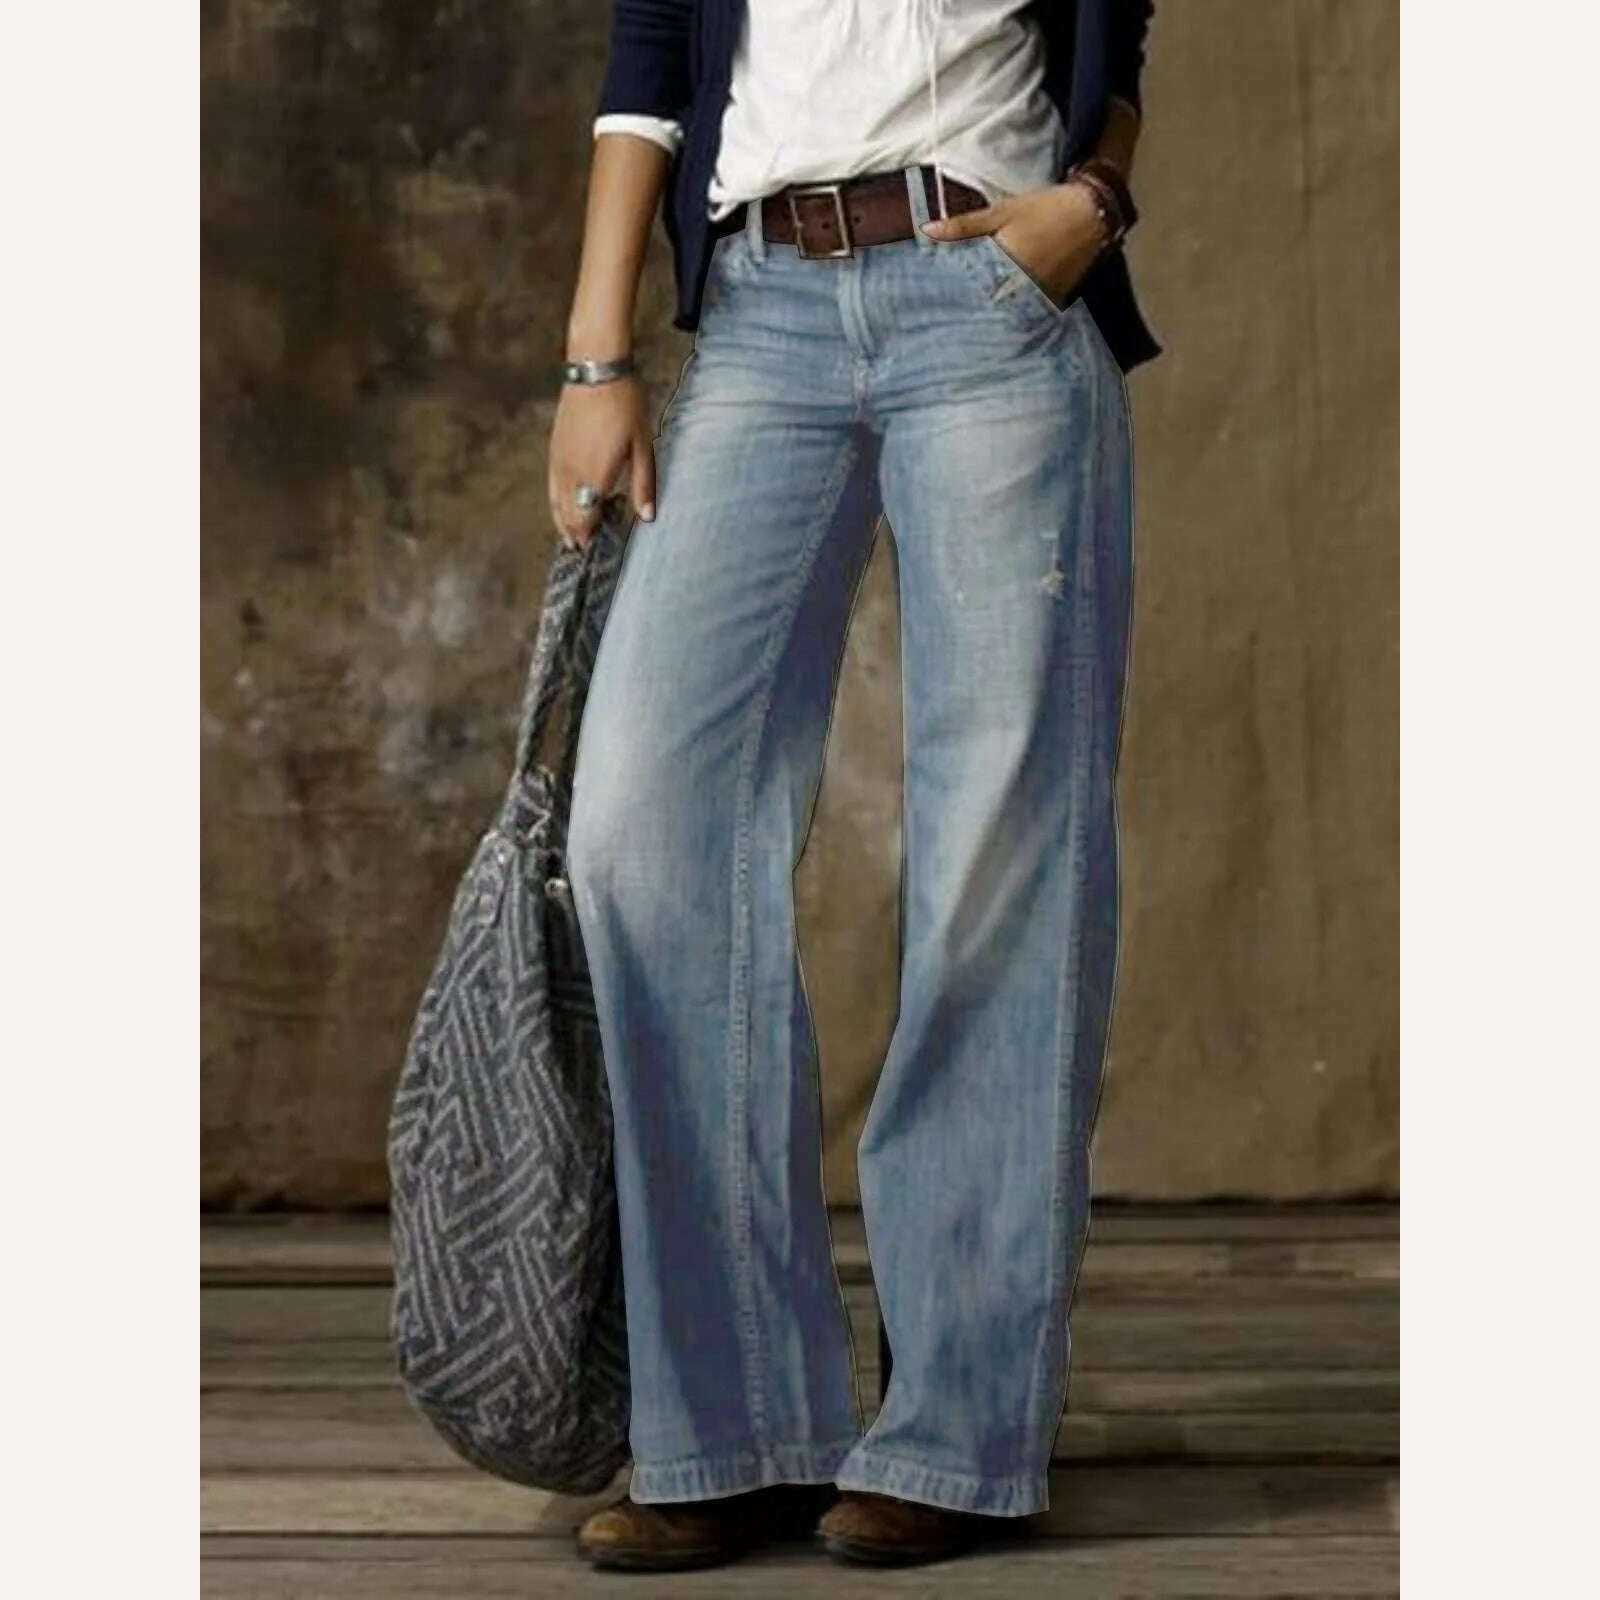 KIMLUD, Vintage Style Jeans Women Loose Wide Leg Trousers Fashion Harajuku Streetwear Straight Denim Pants, Light blue / S, KIMLUD Womens Clothes